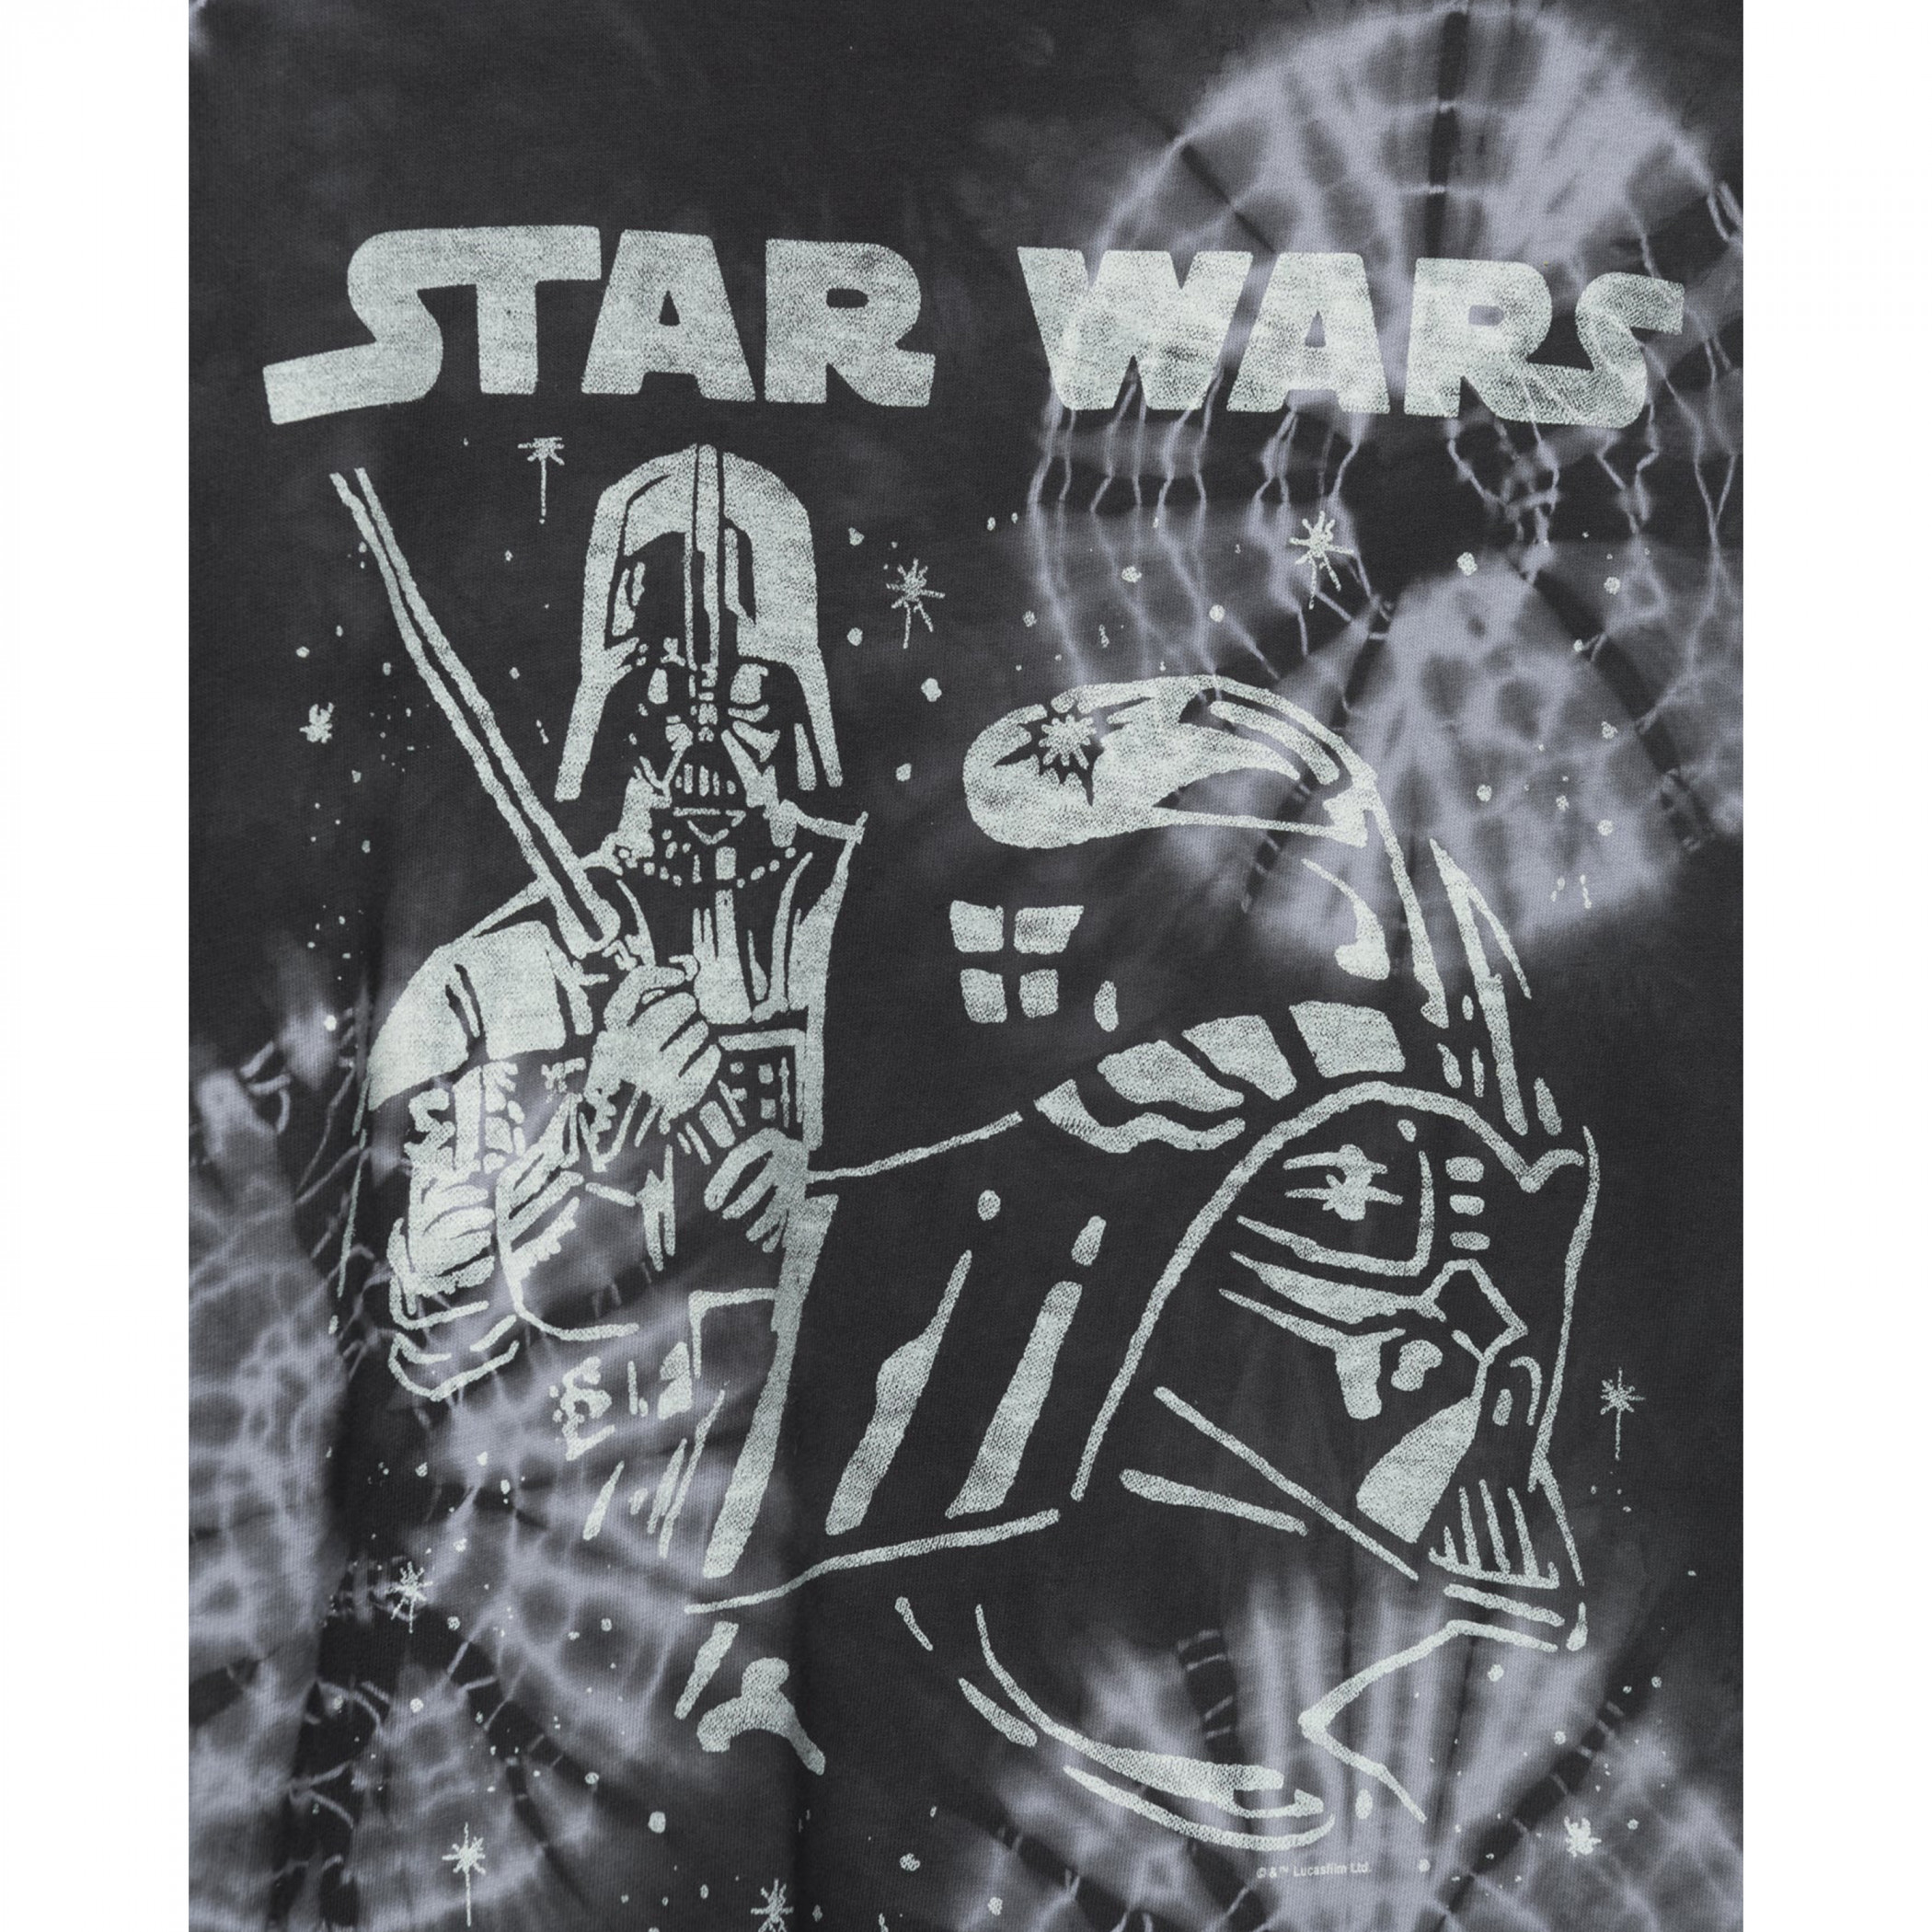 Star Wars Darth Vader Tie-Dye T-Shirt by Junk Food